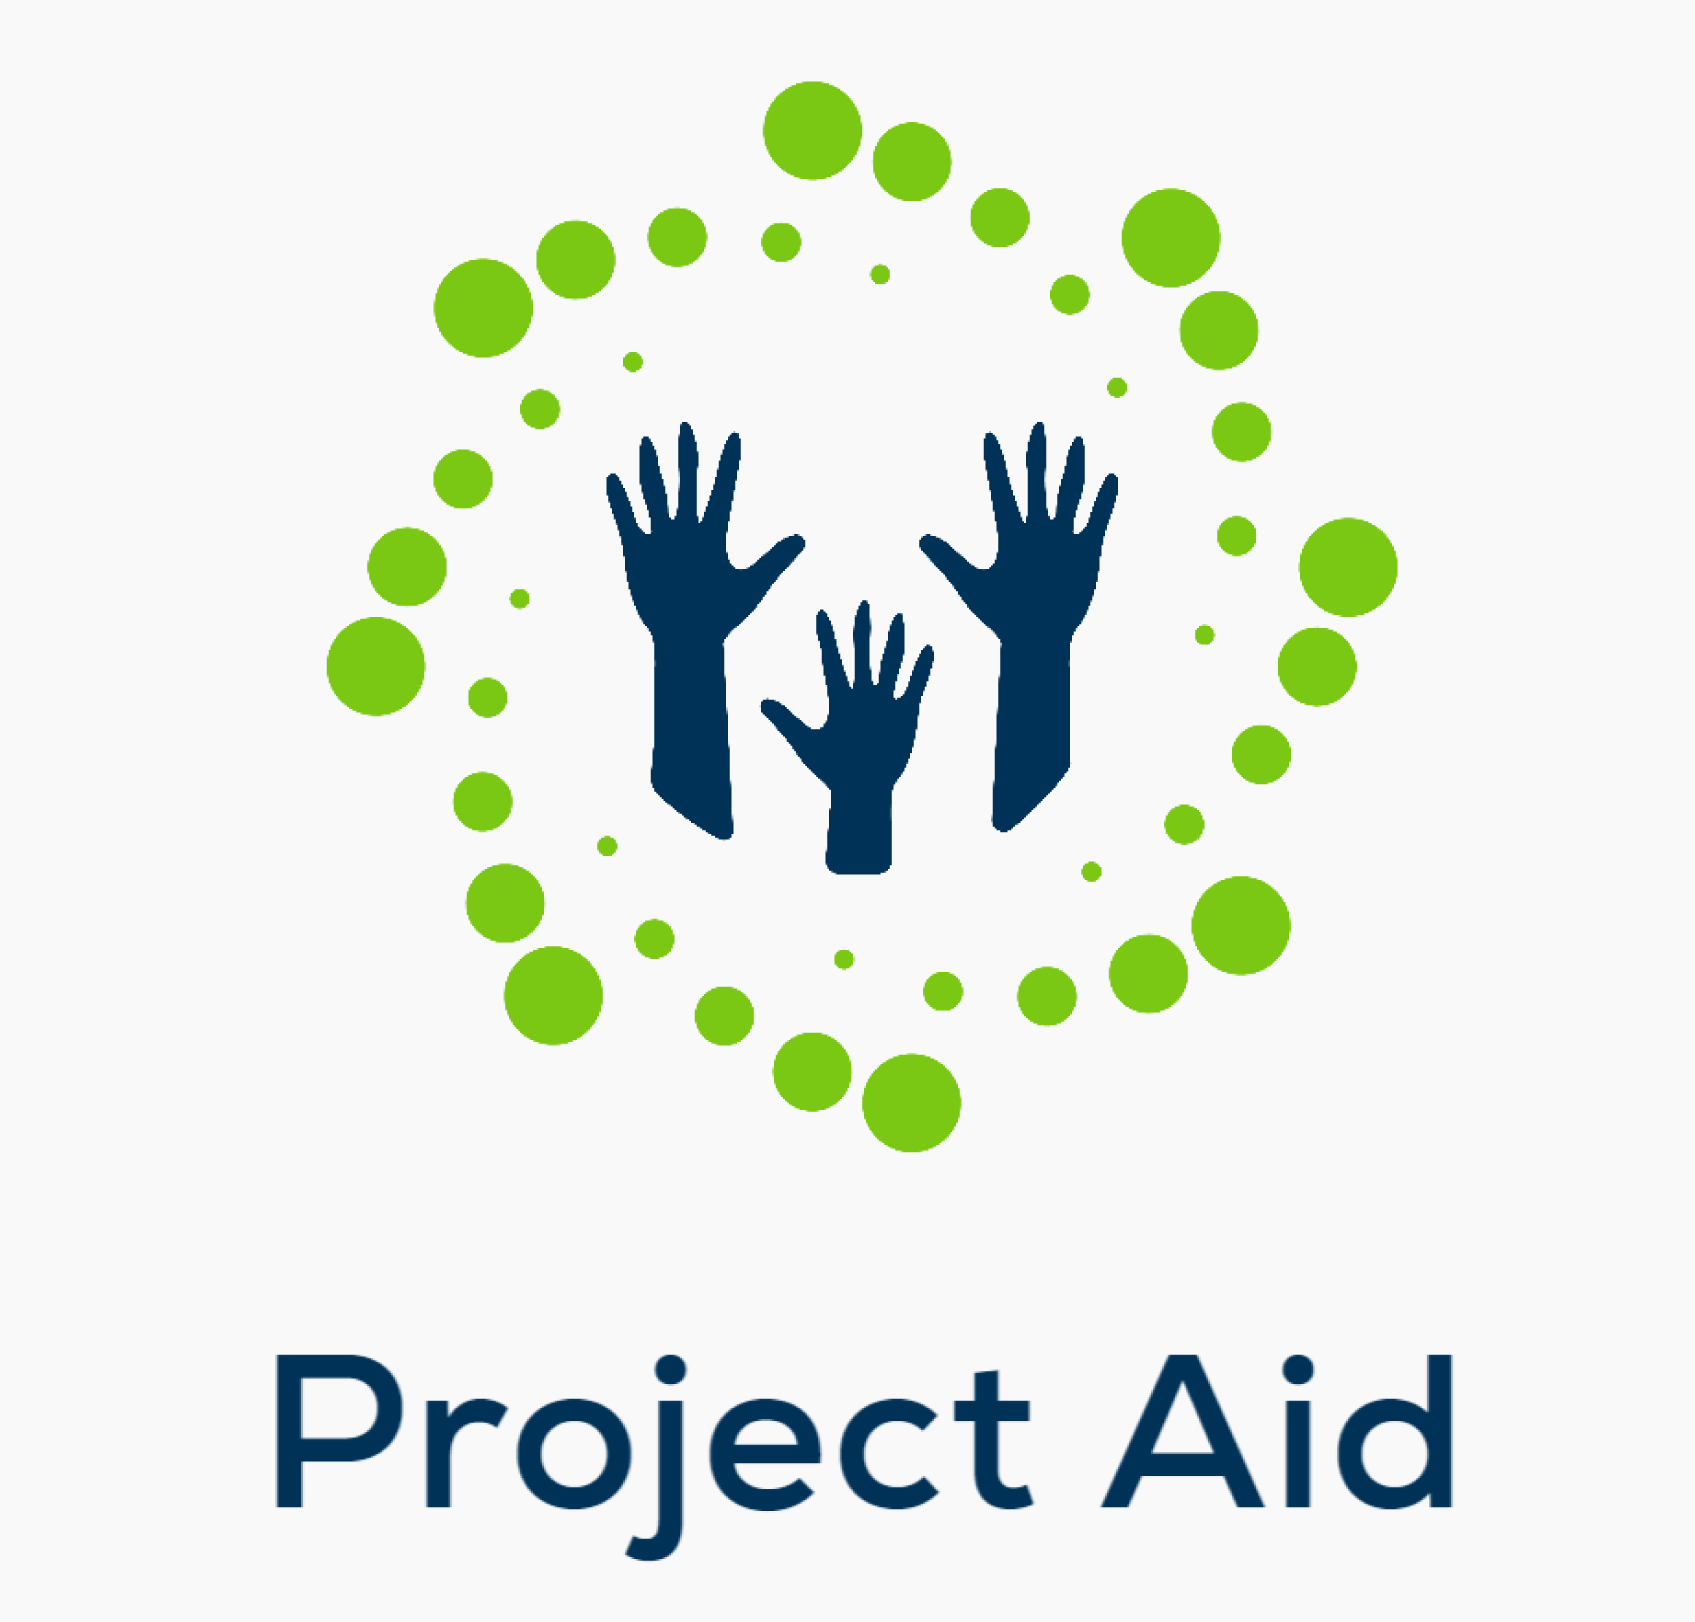 Project AID LTD
___
Associated Partners